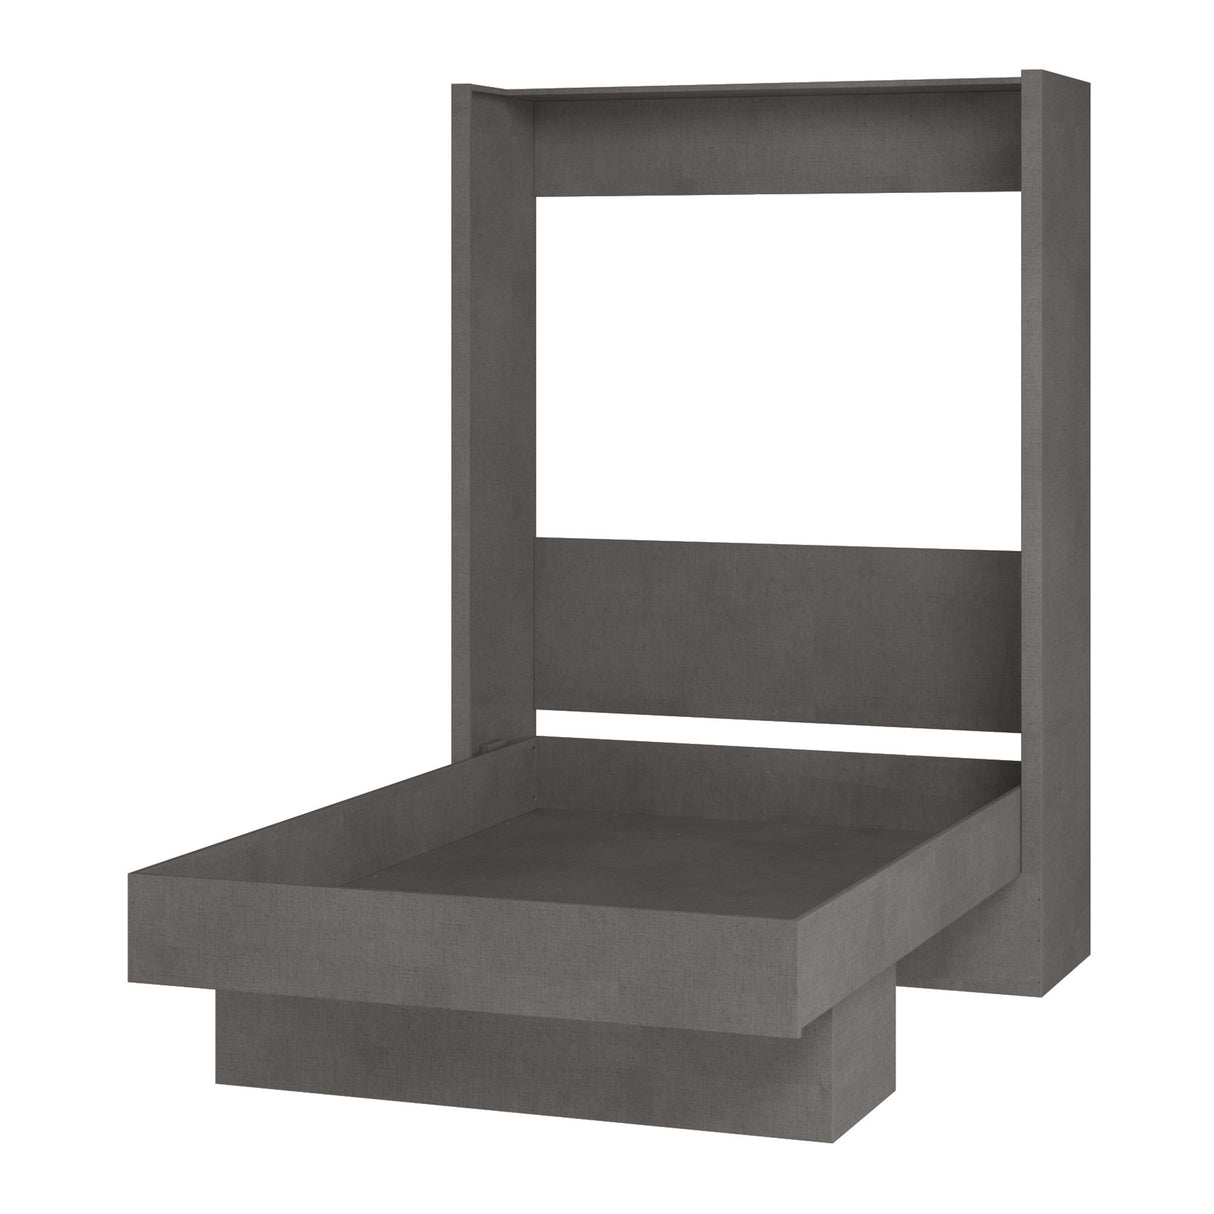 Easy-Lift Full Murphy Wall Bed in Dark Grey with Shelf